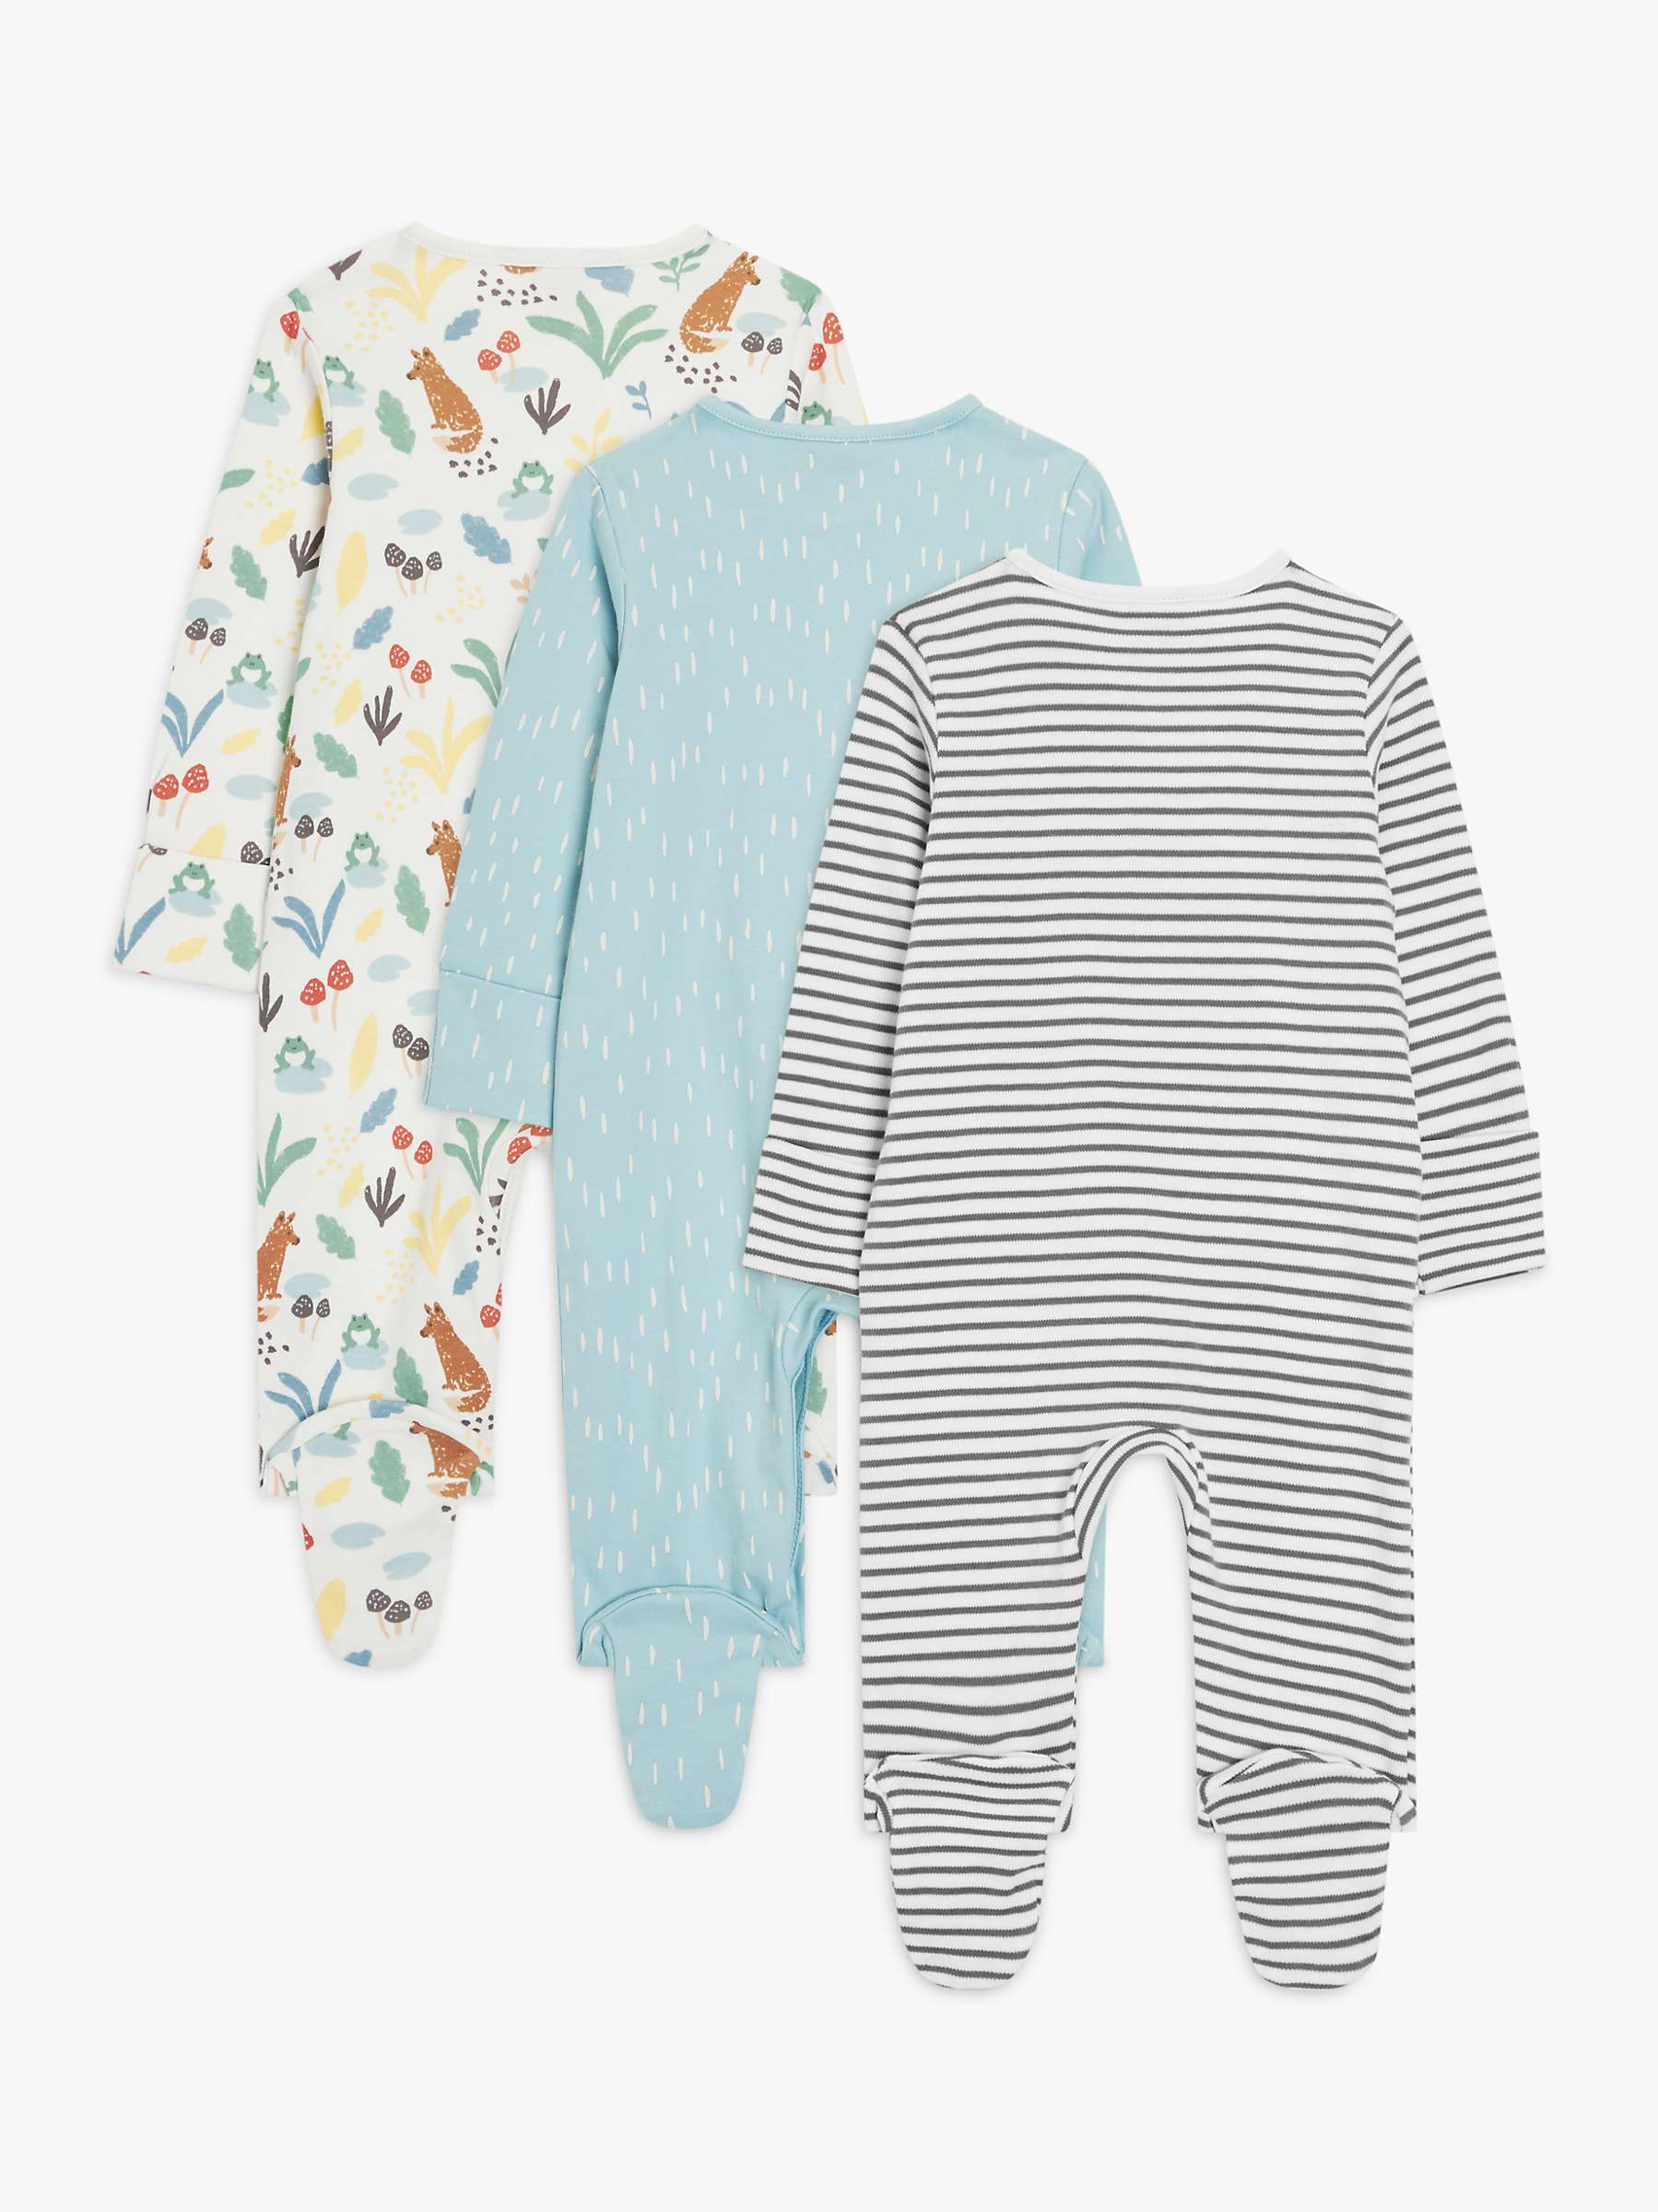 Buy John Lewis Baby Cotton Fox Print Sleepsuits, Pack of 3, Multi Online at johnlewis.com